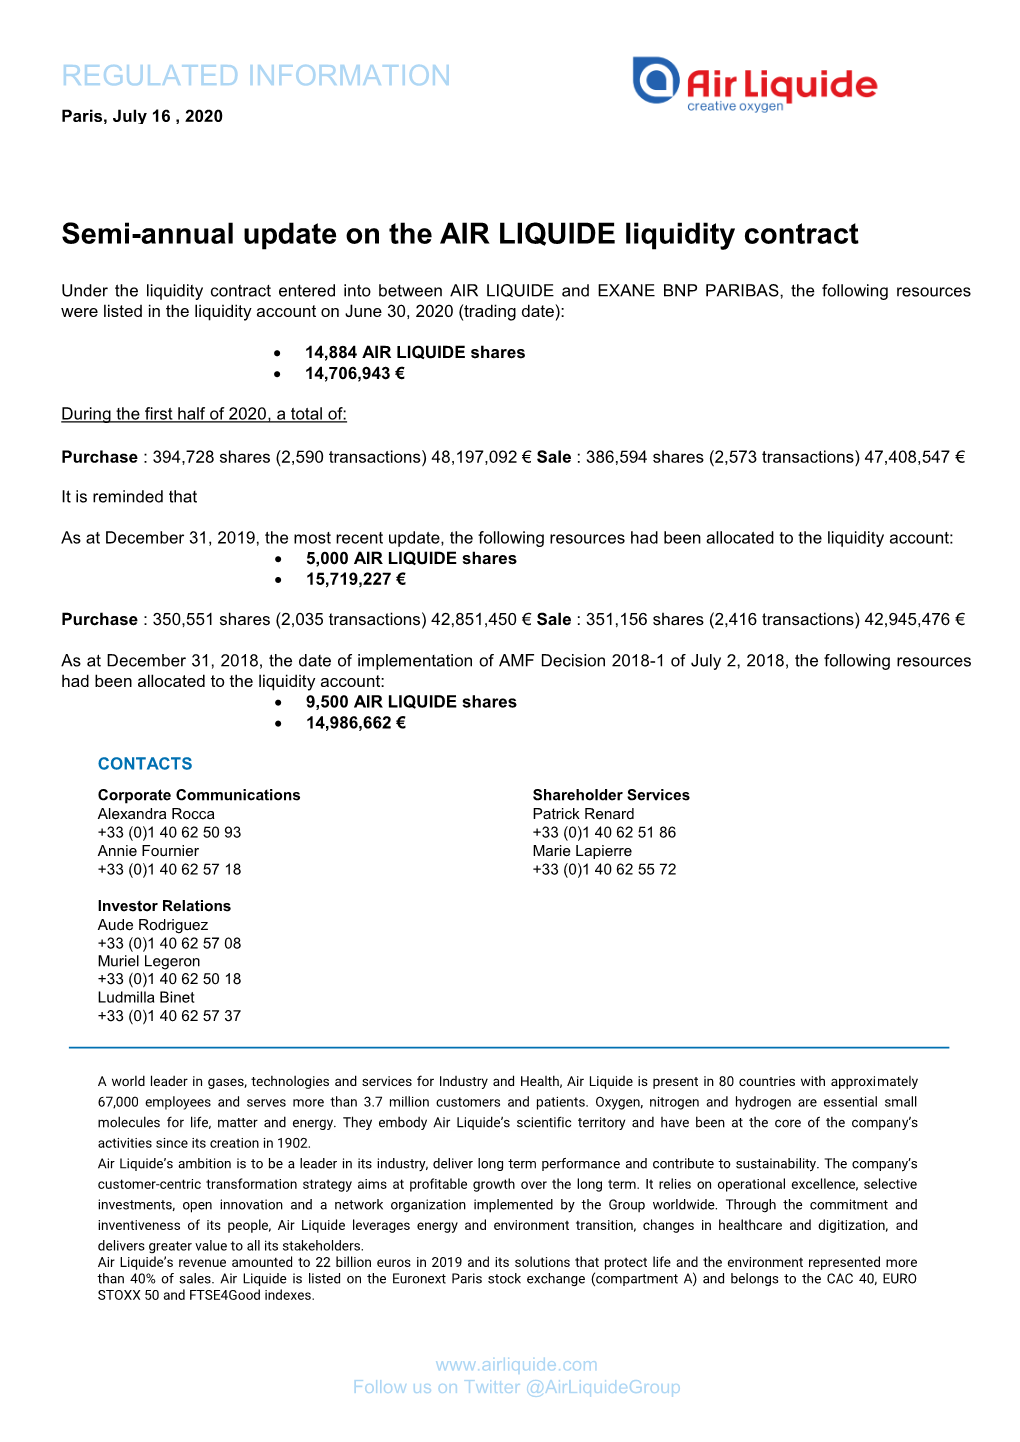 Semi-Annual Update on the AIR LIQUIDE Liquidity Contract